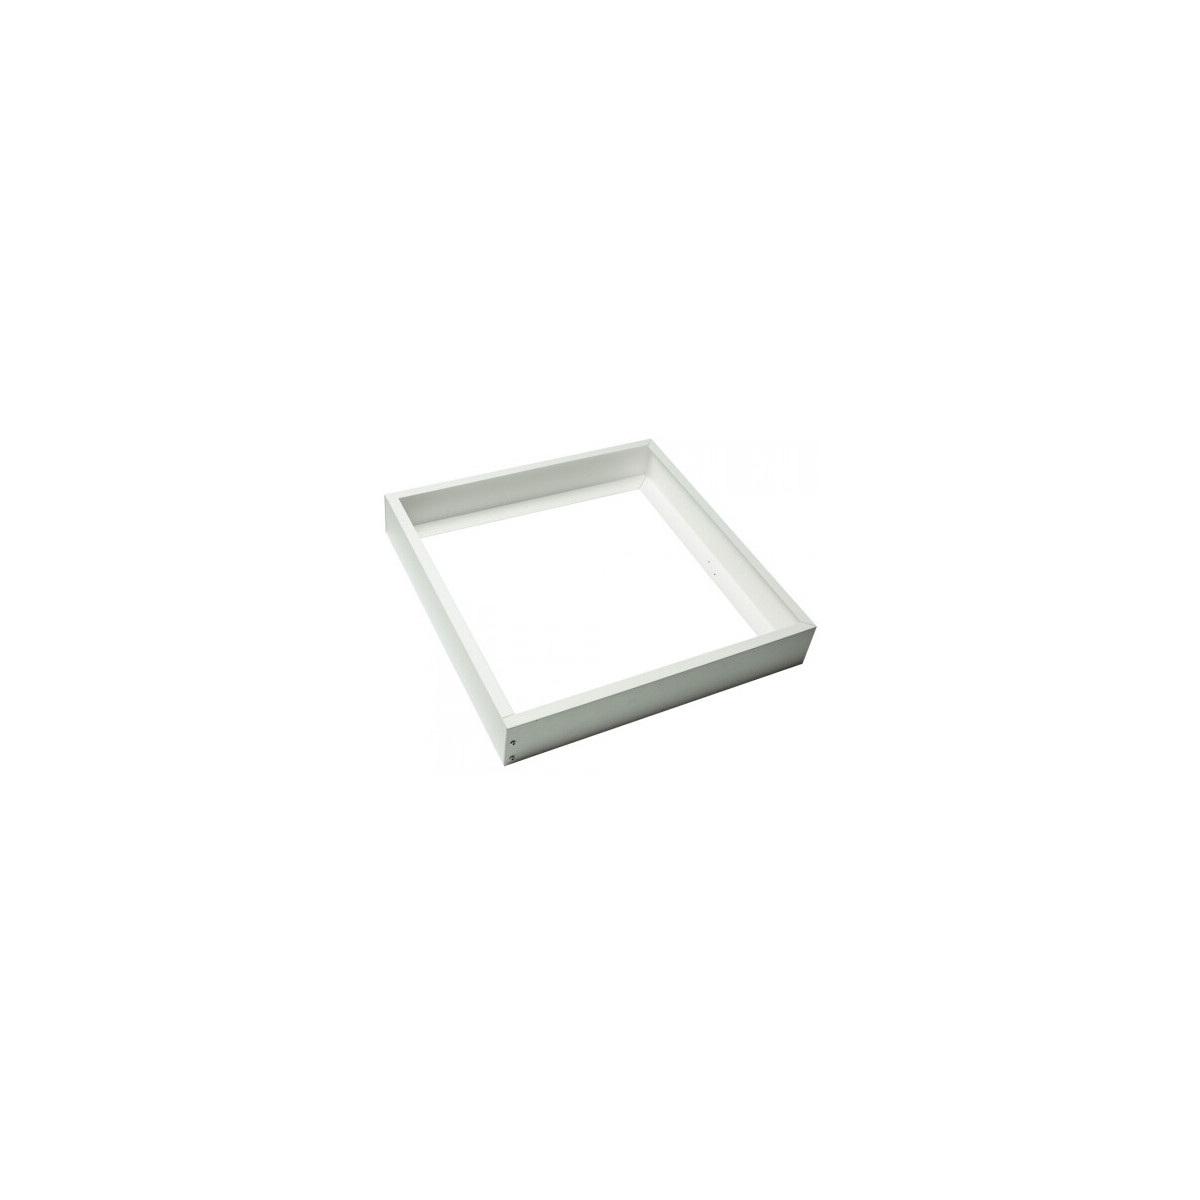 Marco aluminio blanco para panel 60x60